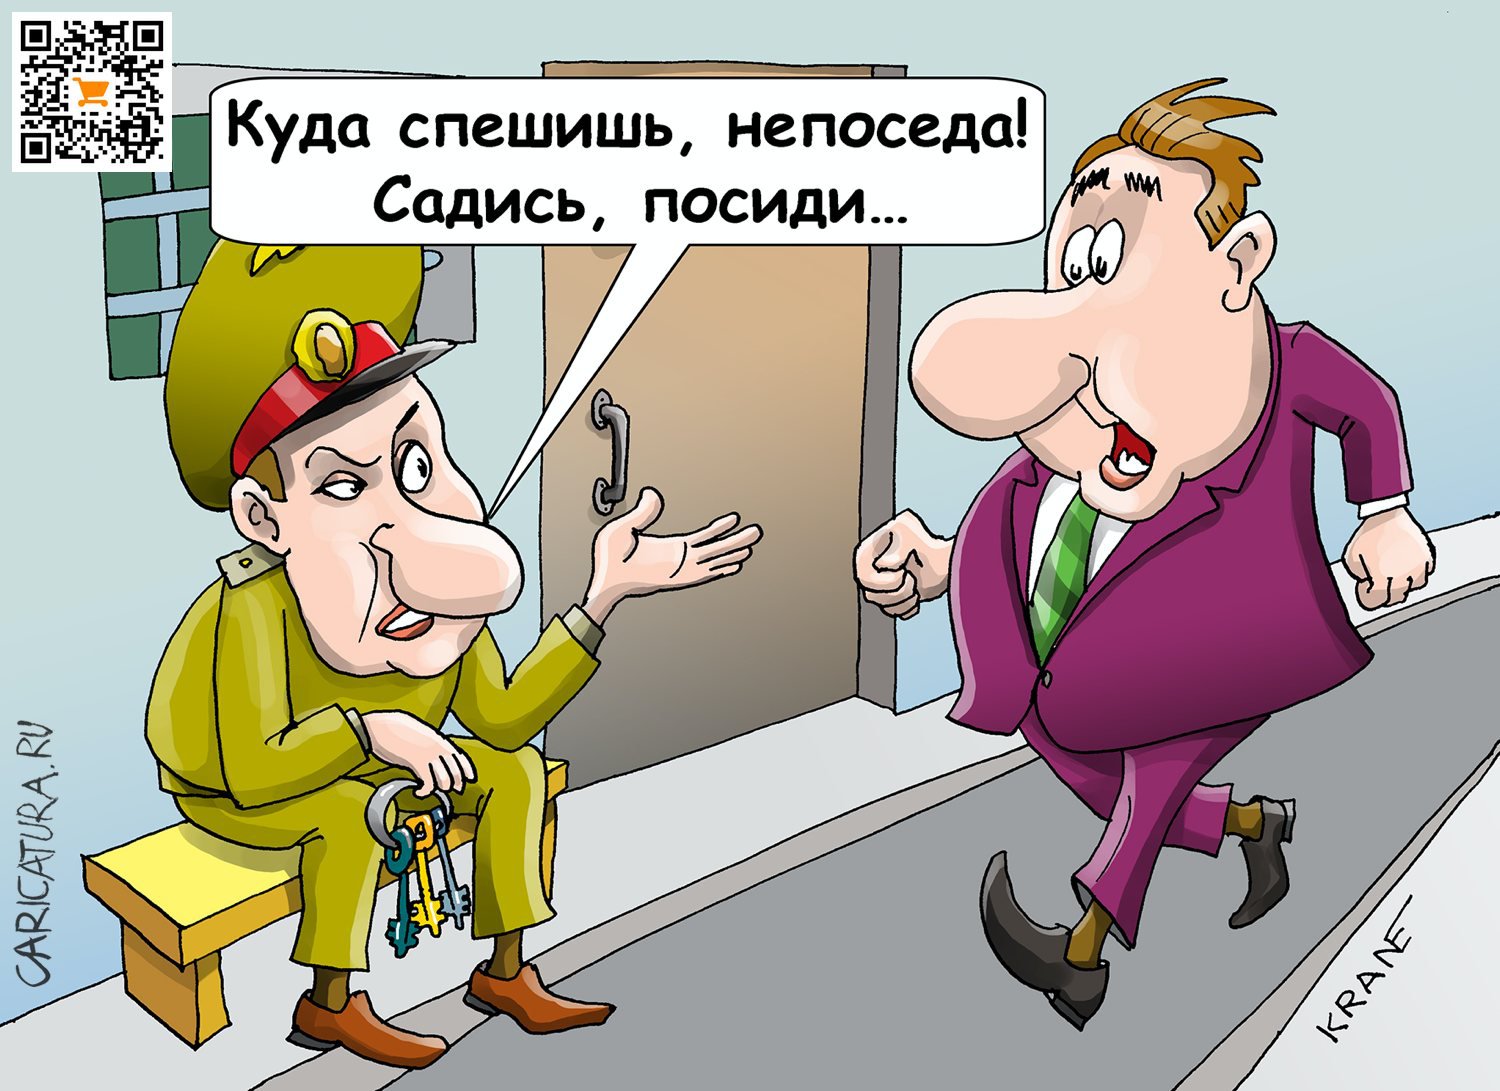 Карикатура "Непоседа тоже может сесть", Евгений Кран